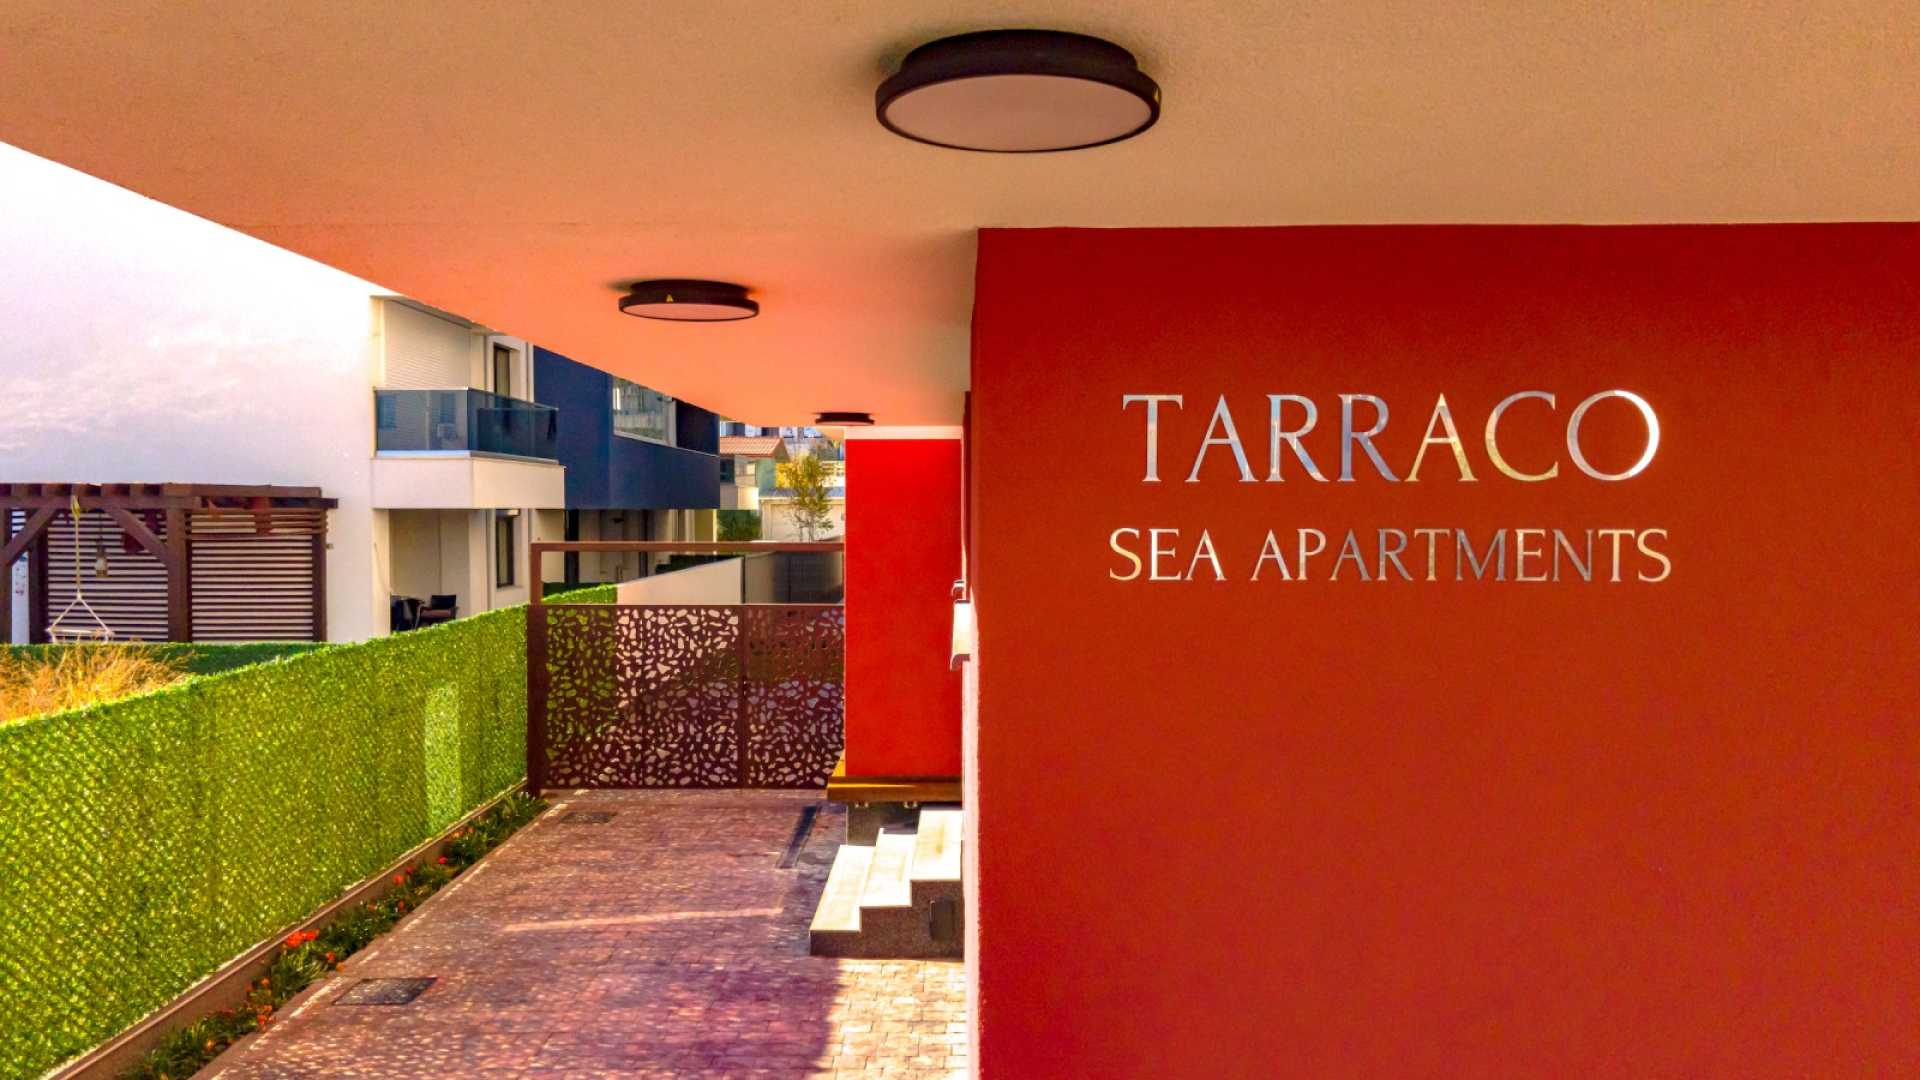 Tarraco Sea Apartments